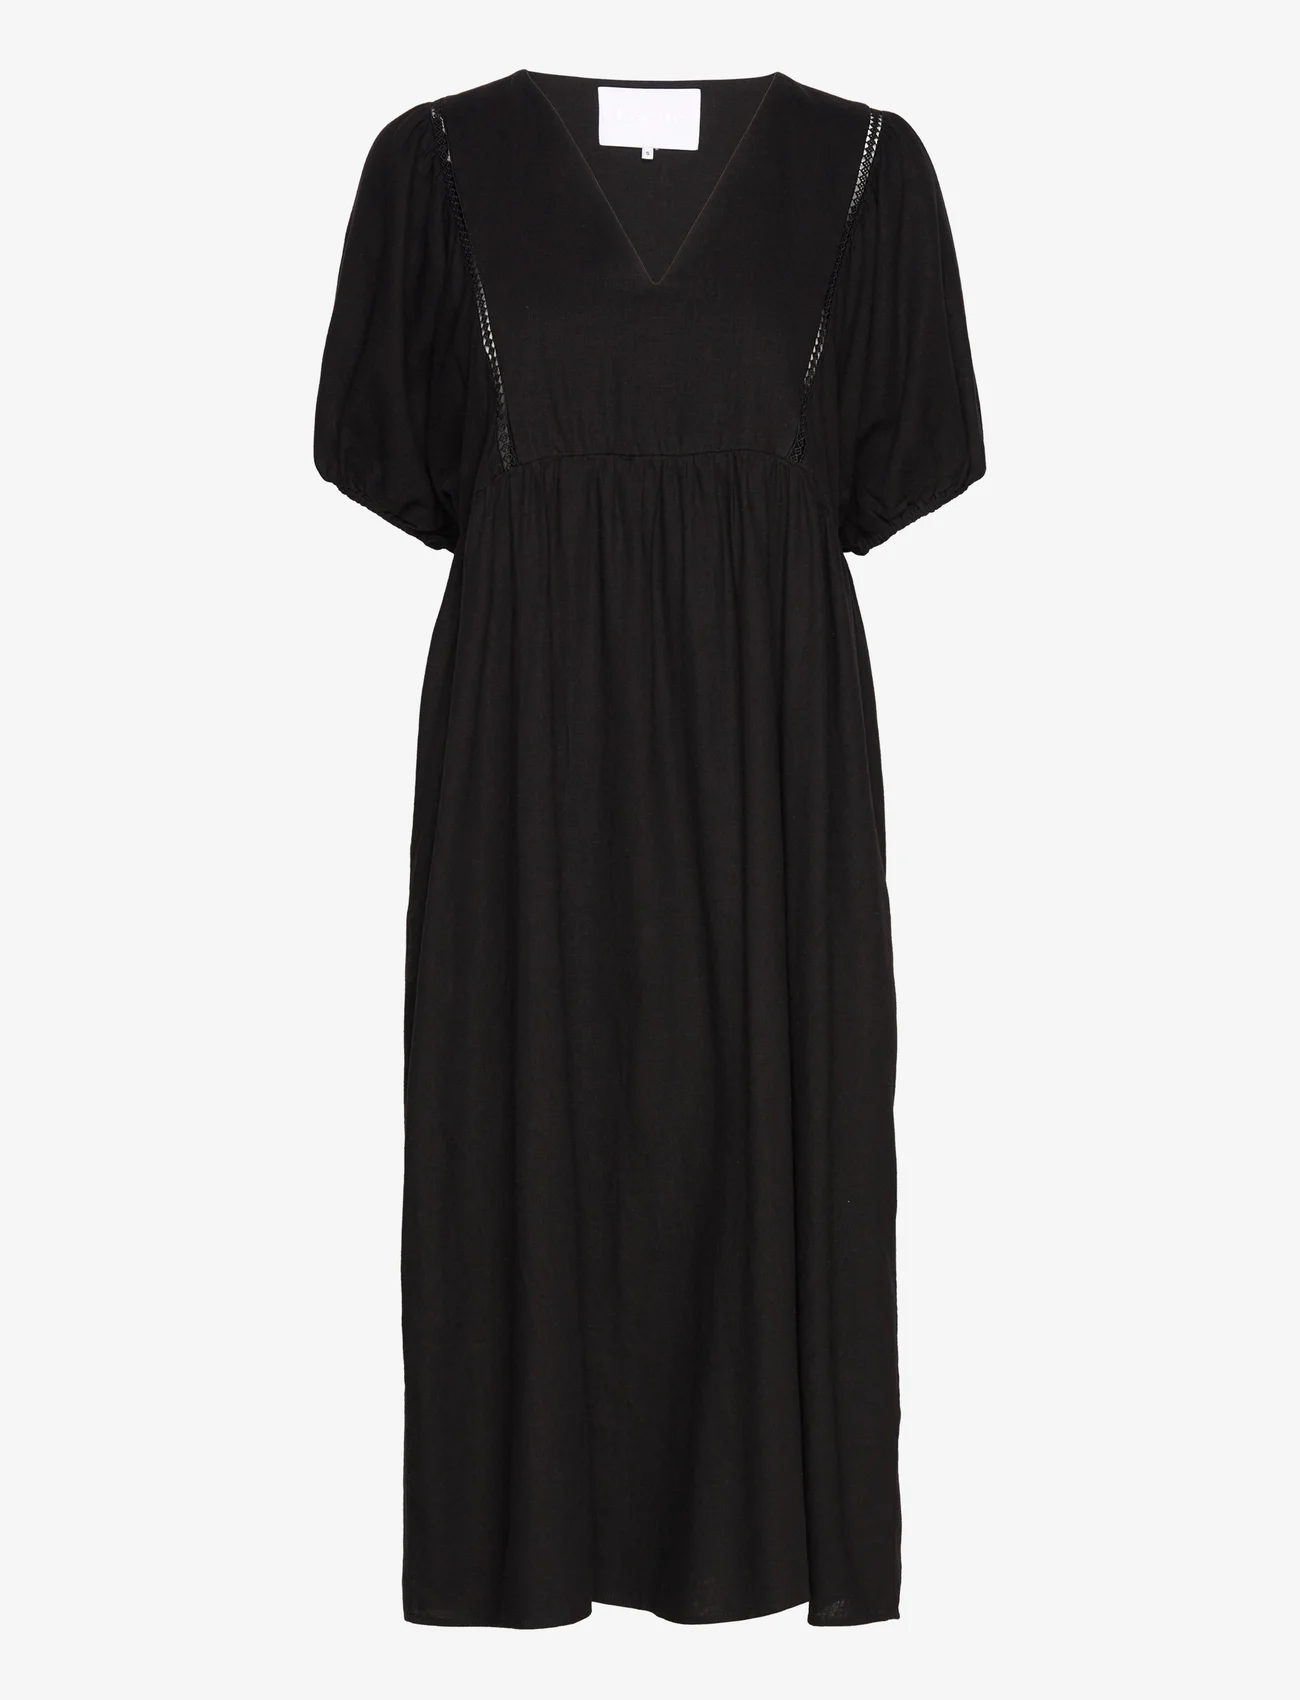 Levete Room - LR-NAJA - marškinių tipo suknelės - l999 - black - 0